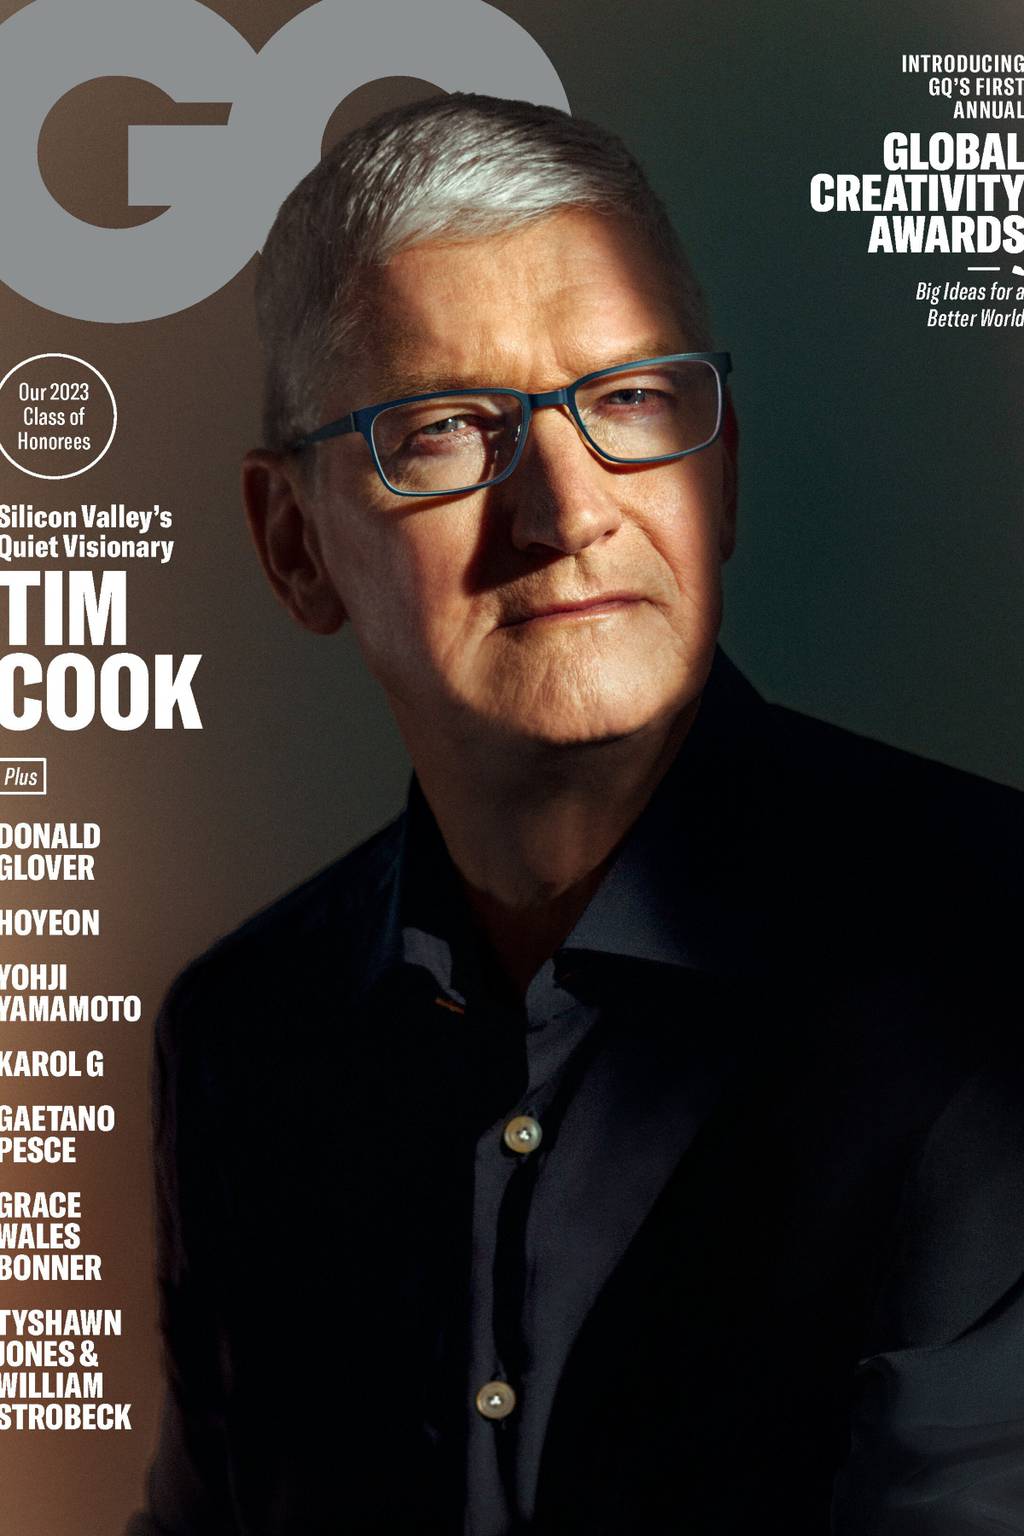 Tim Cook is one of the winners of GQ's inaugural Global Creativity Awards